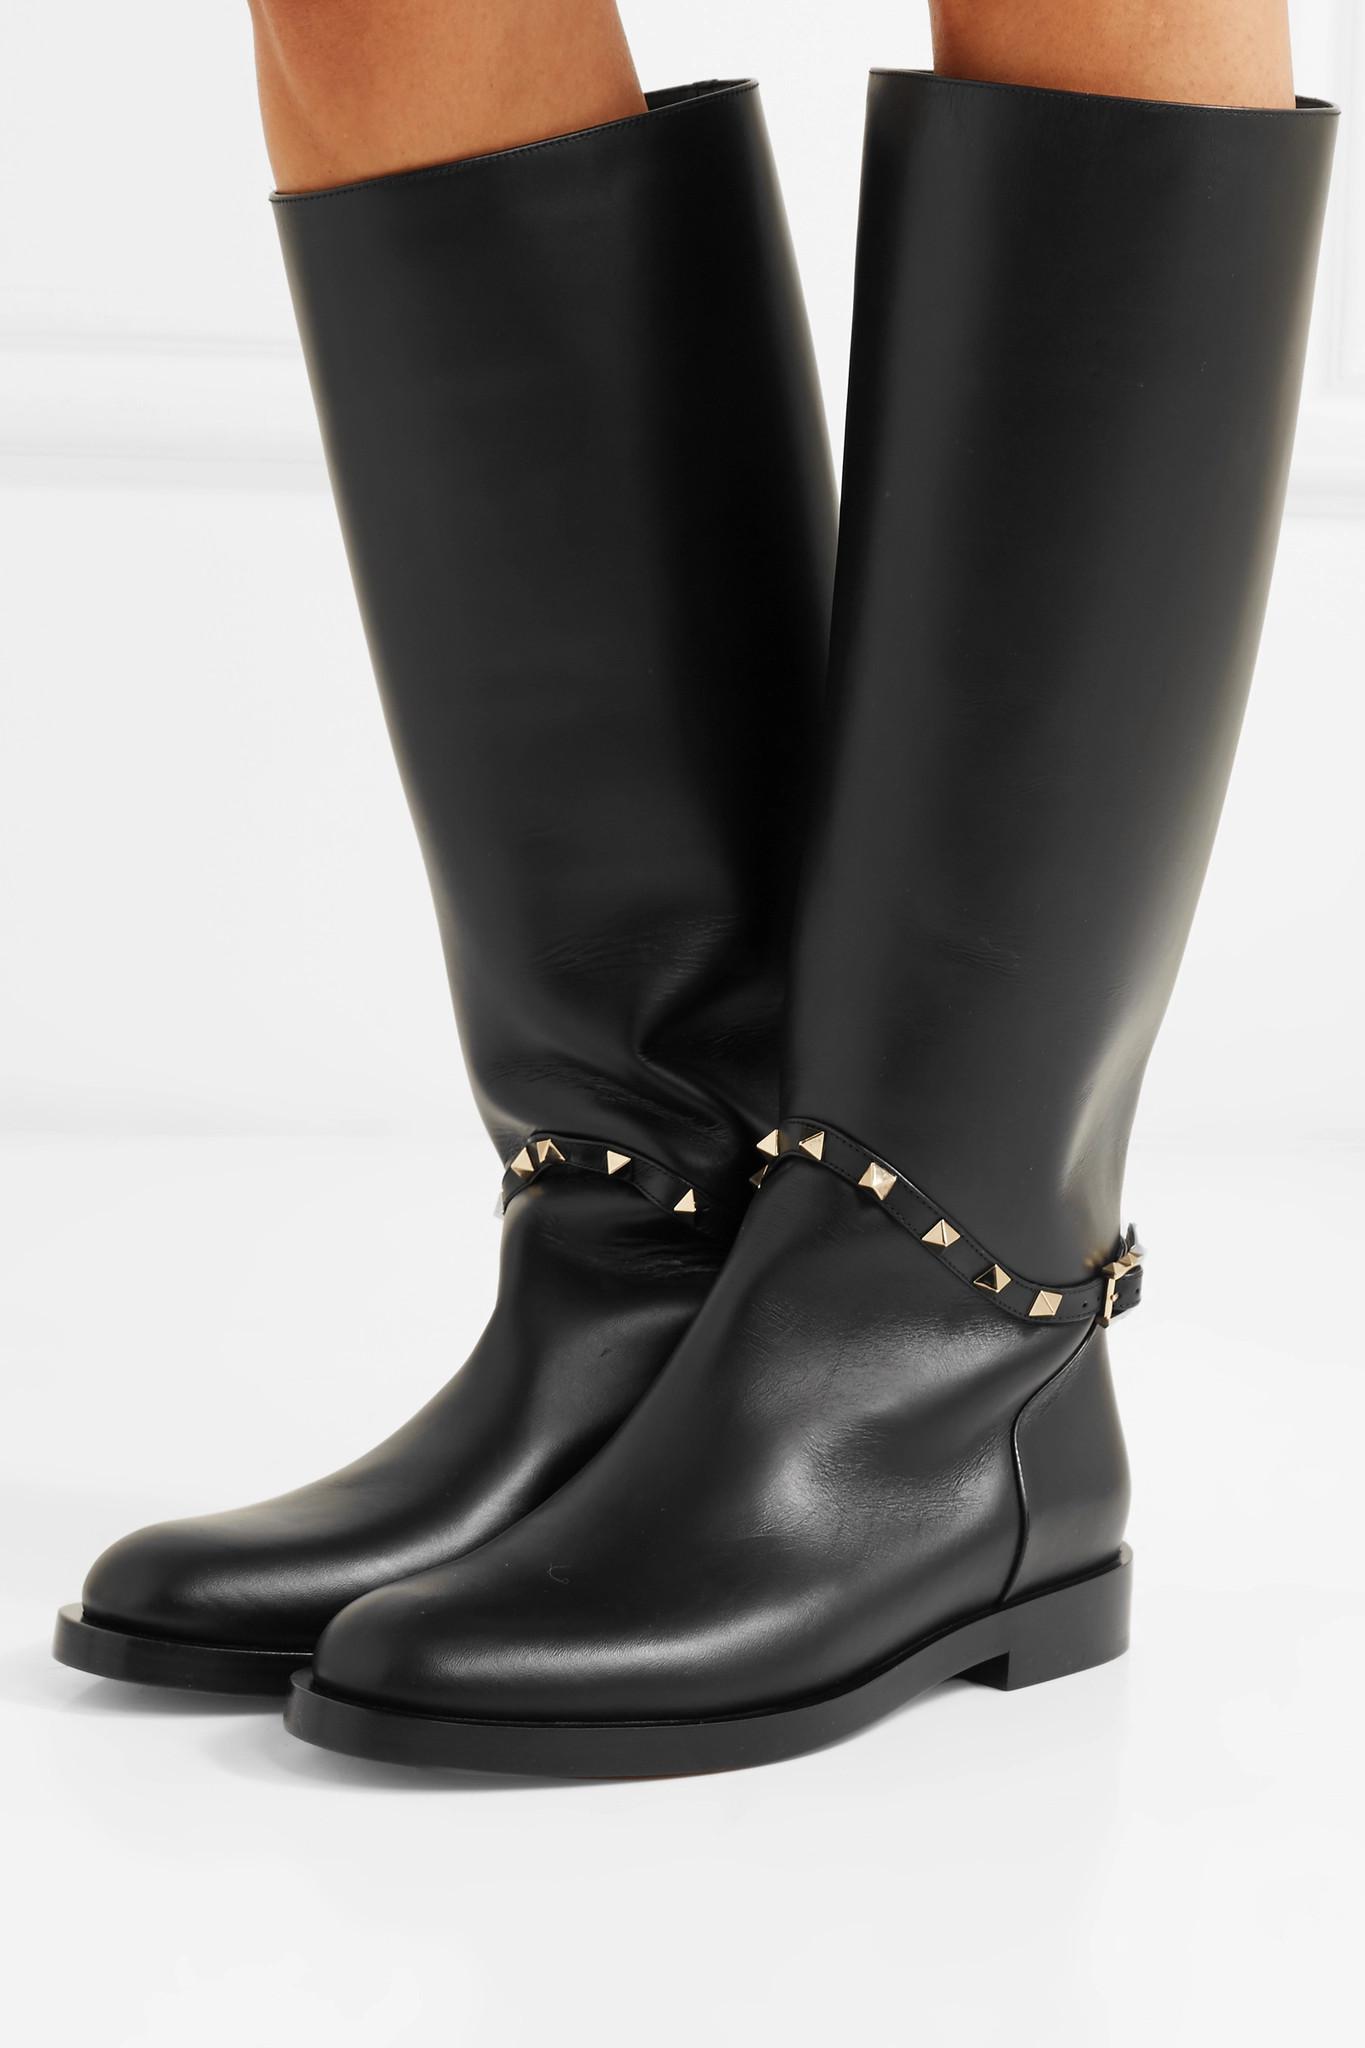 Valentino Garavani Studded Leather Knee Boots in Black - Lyst